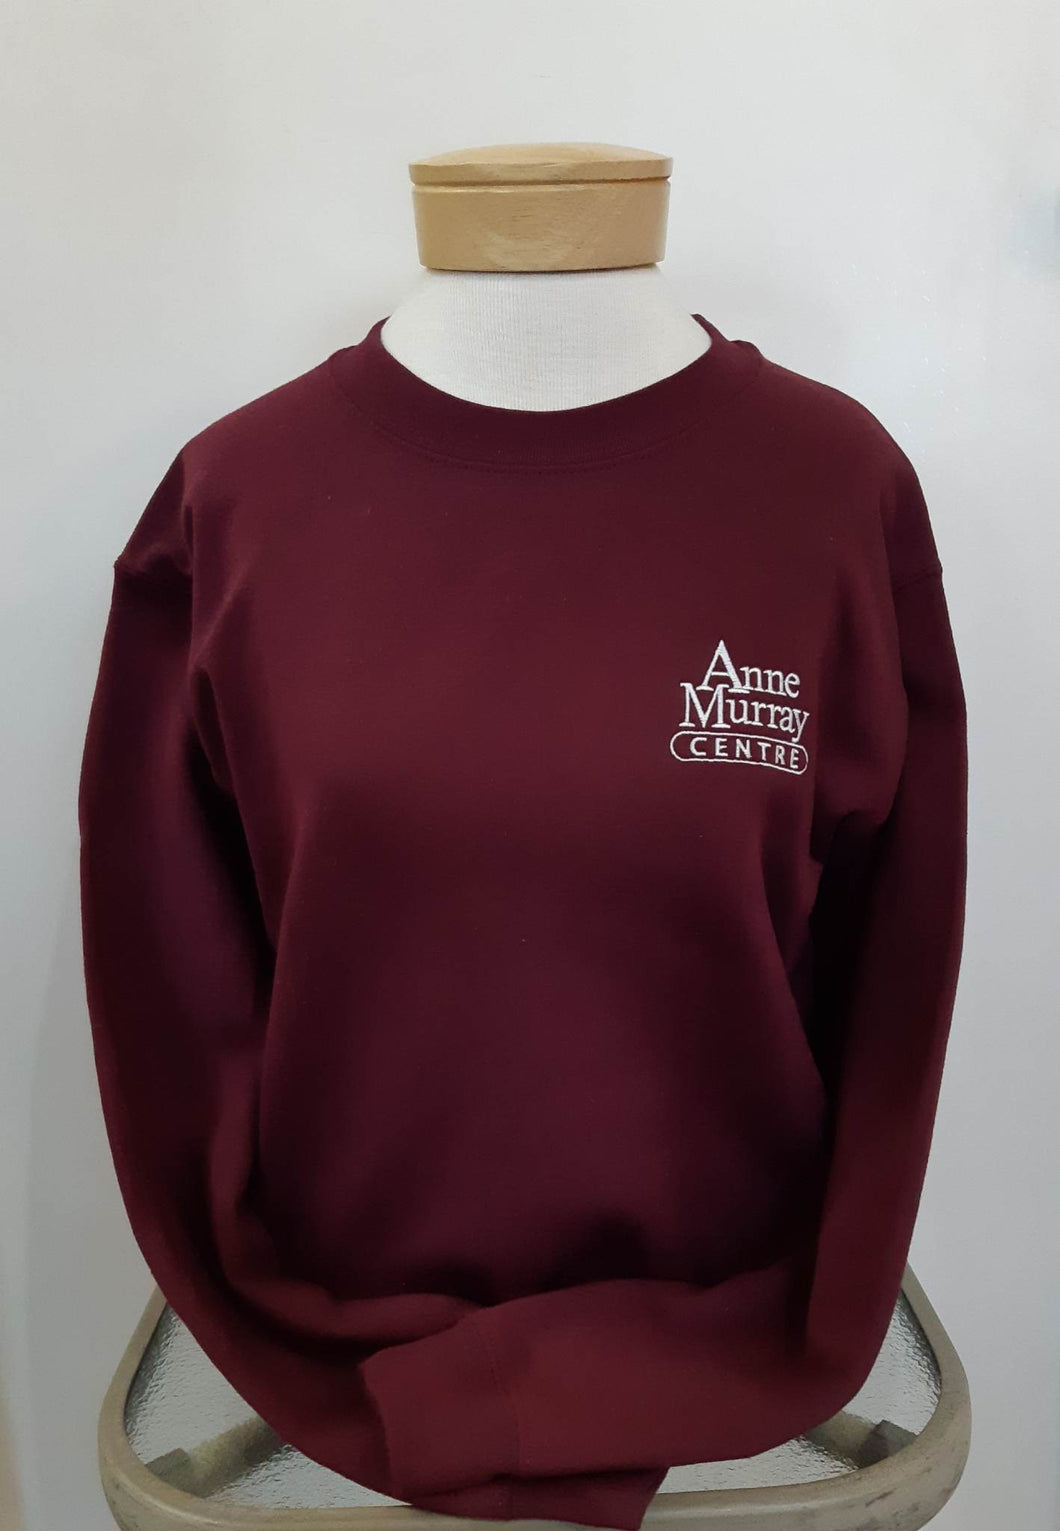 Anne Murray Centre Crewneck Sweater